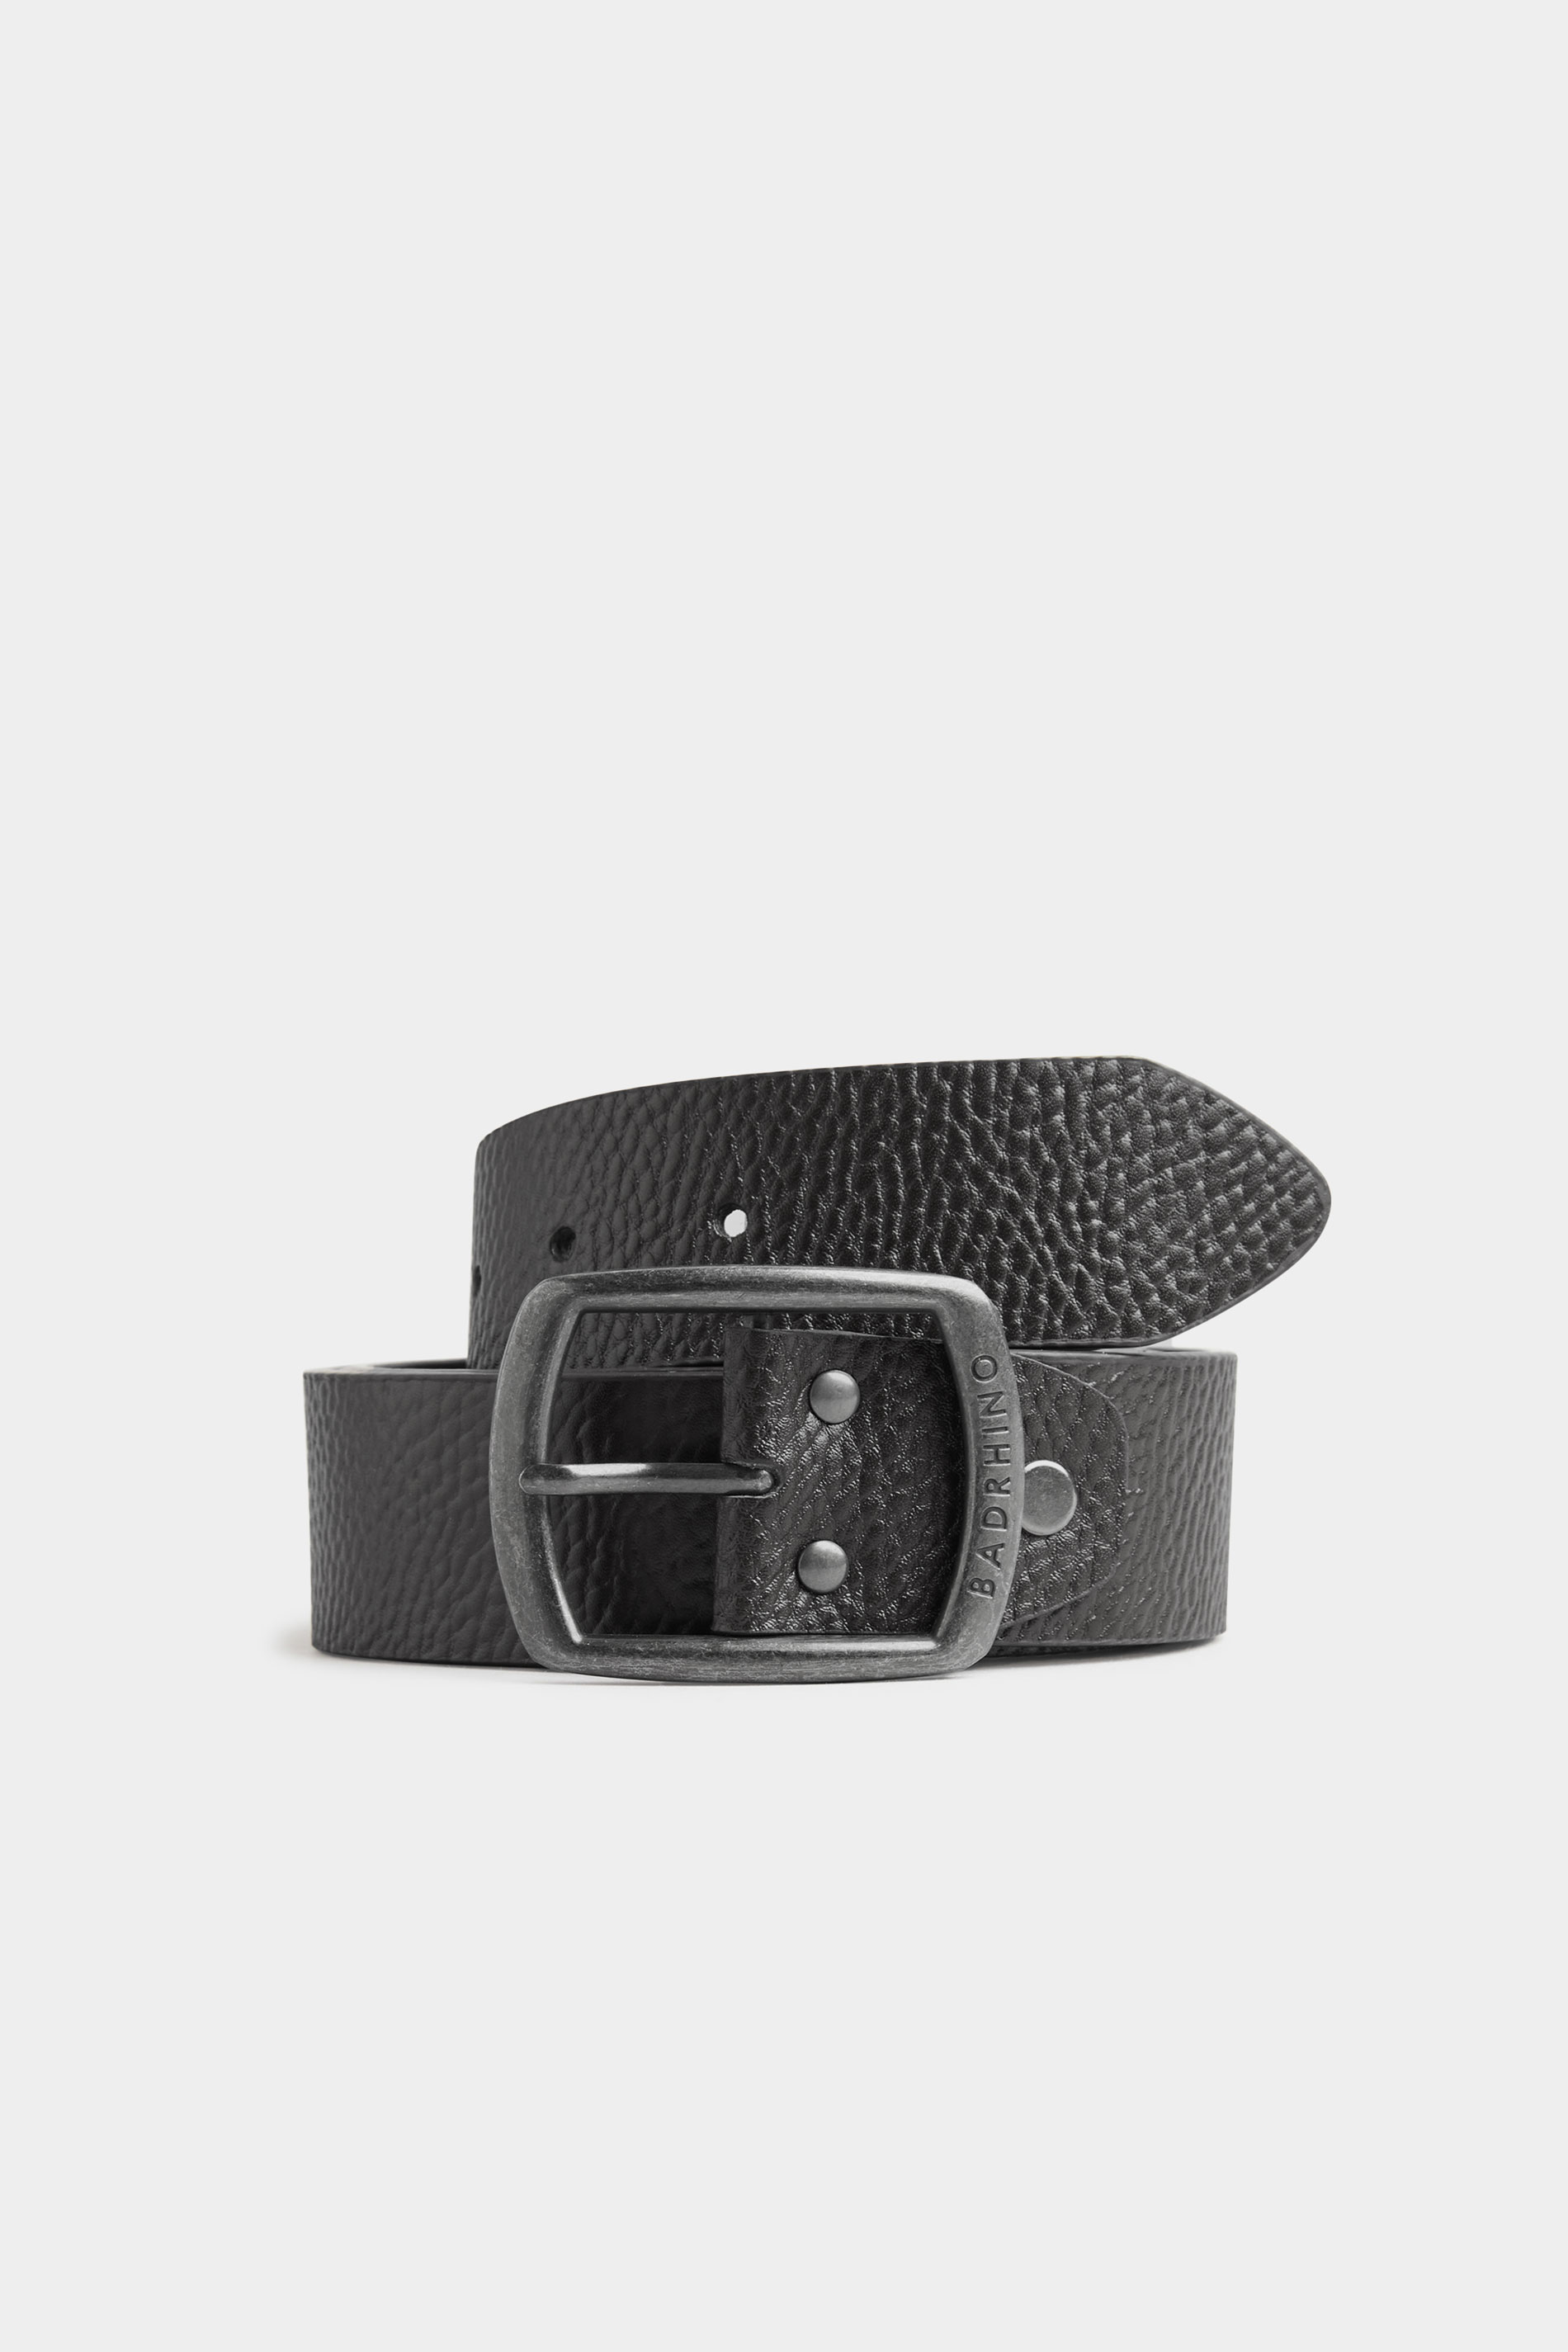 BadRhino Black Leather Belt 1